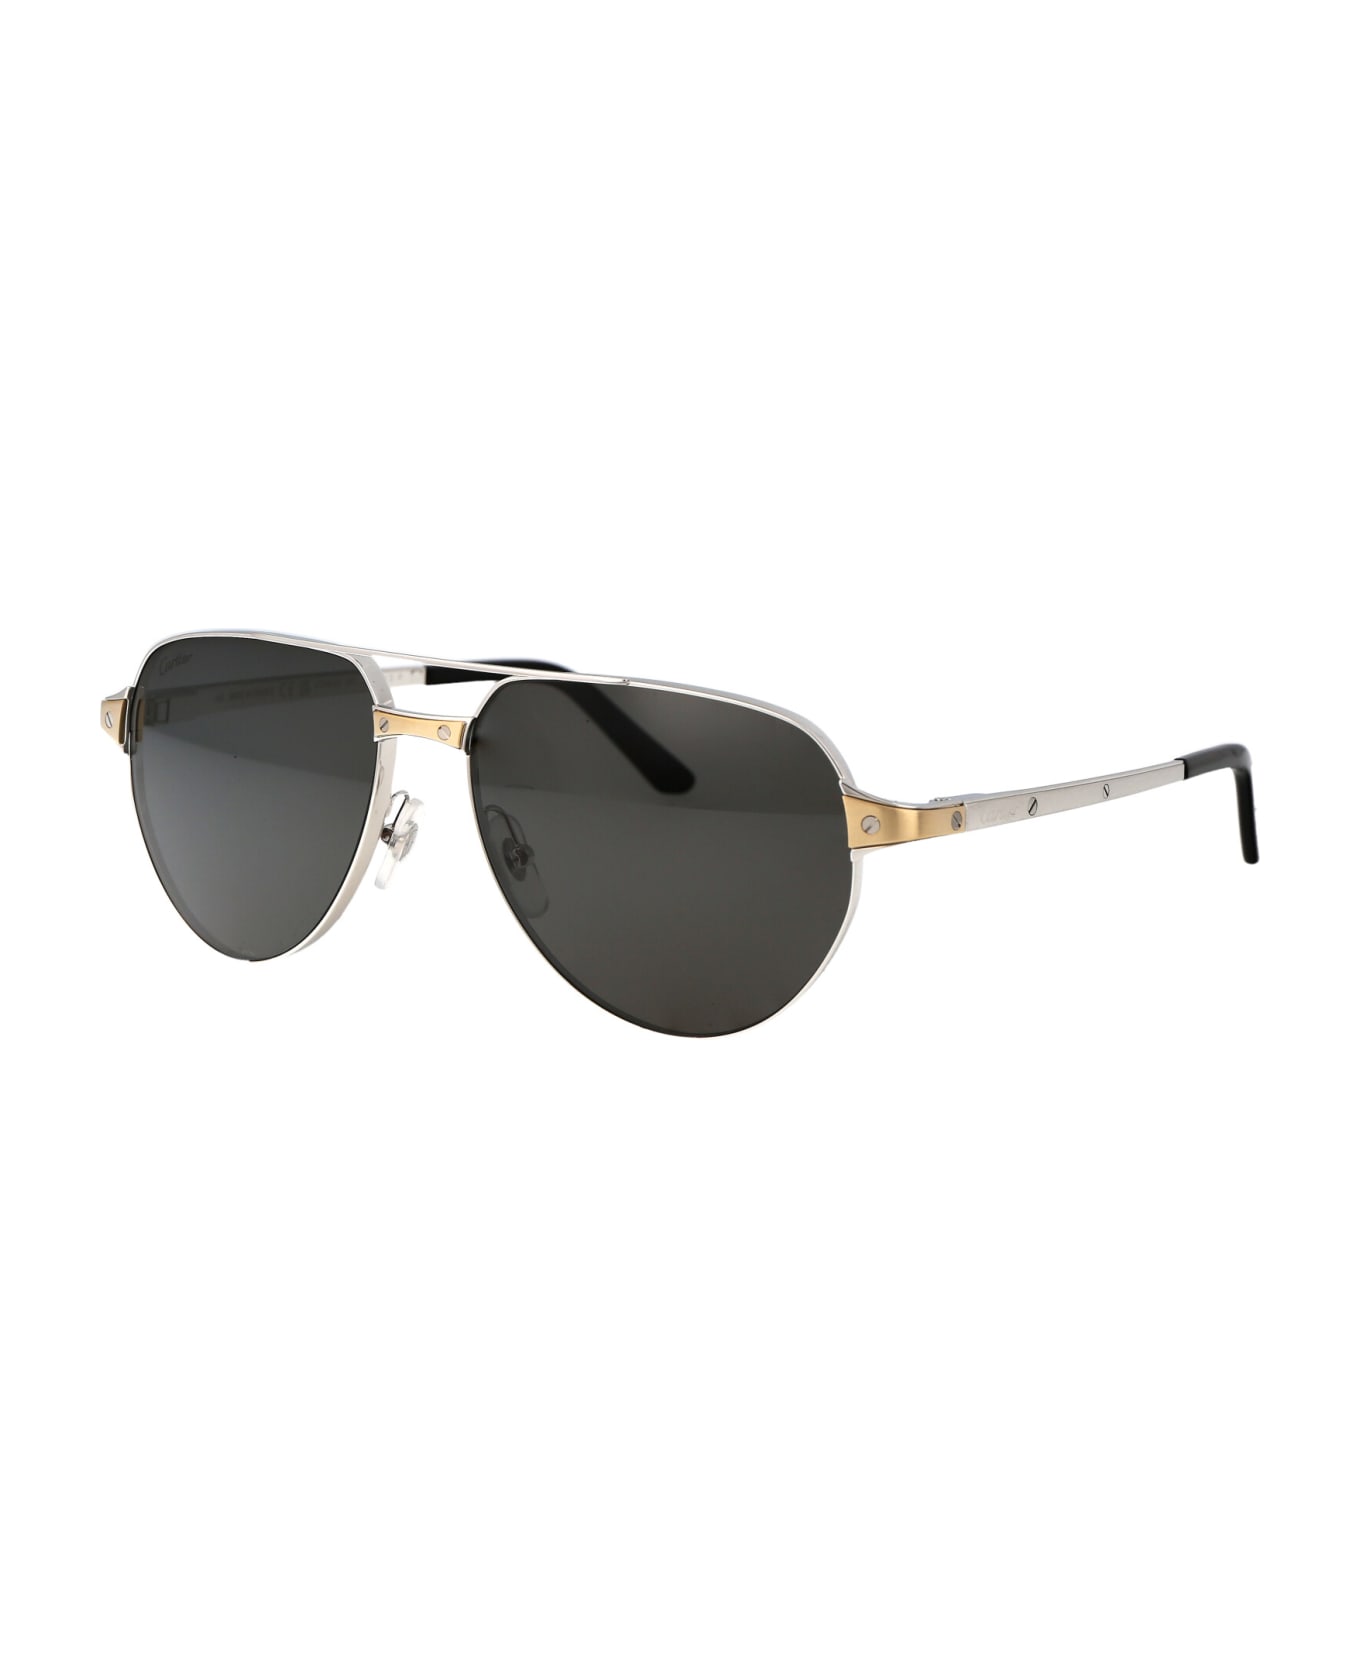 Cartier Eyewear Ct0425s Sunglasses - 001 SILVER SILVER SMOKE